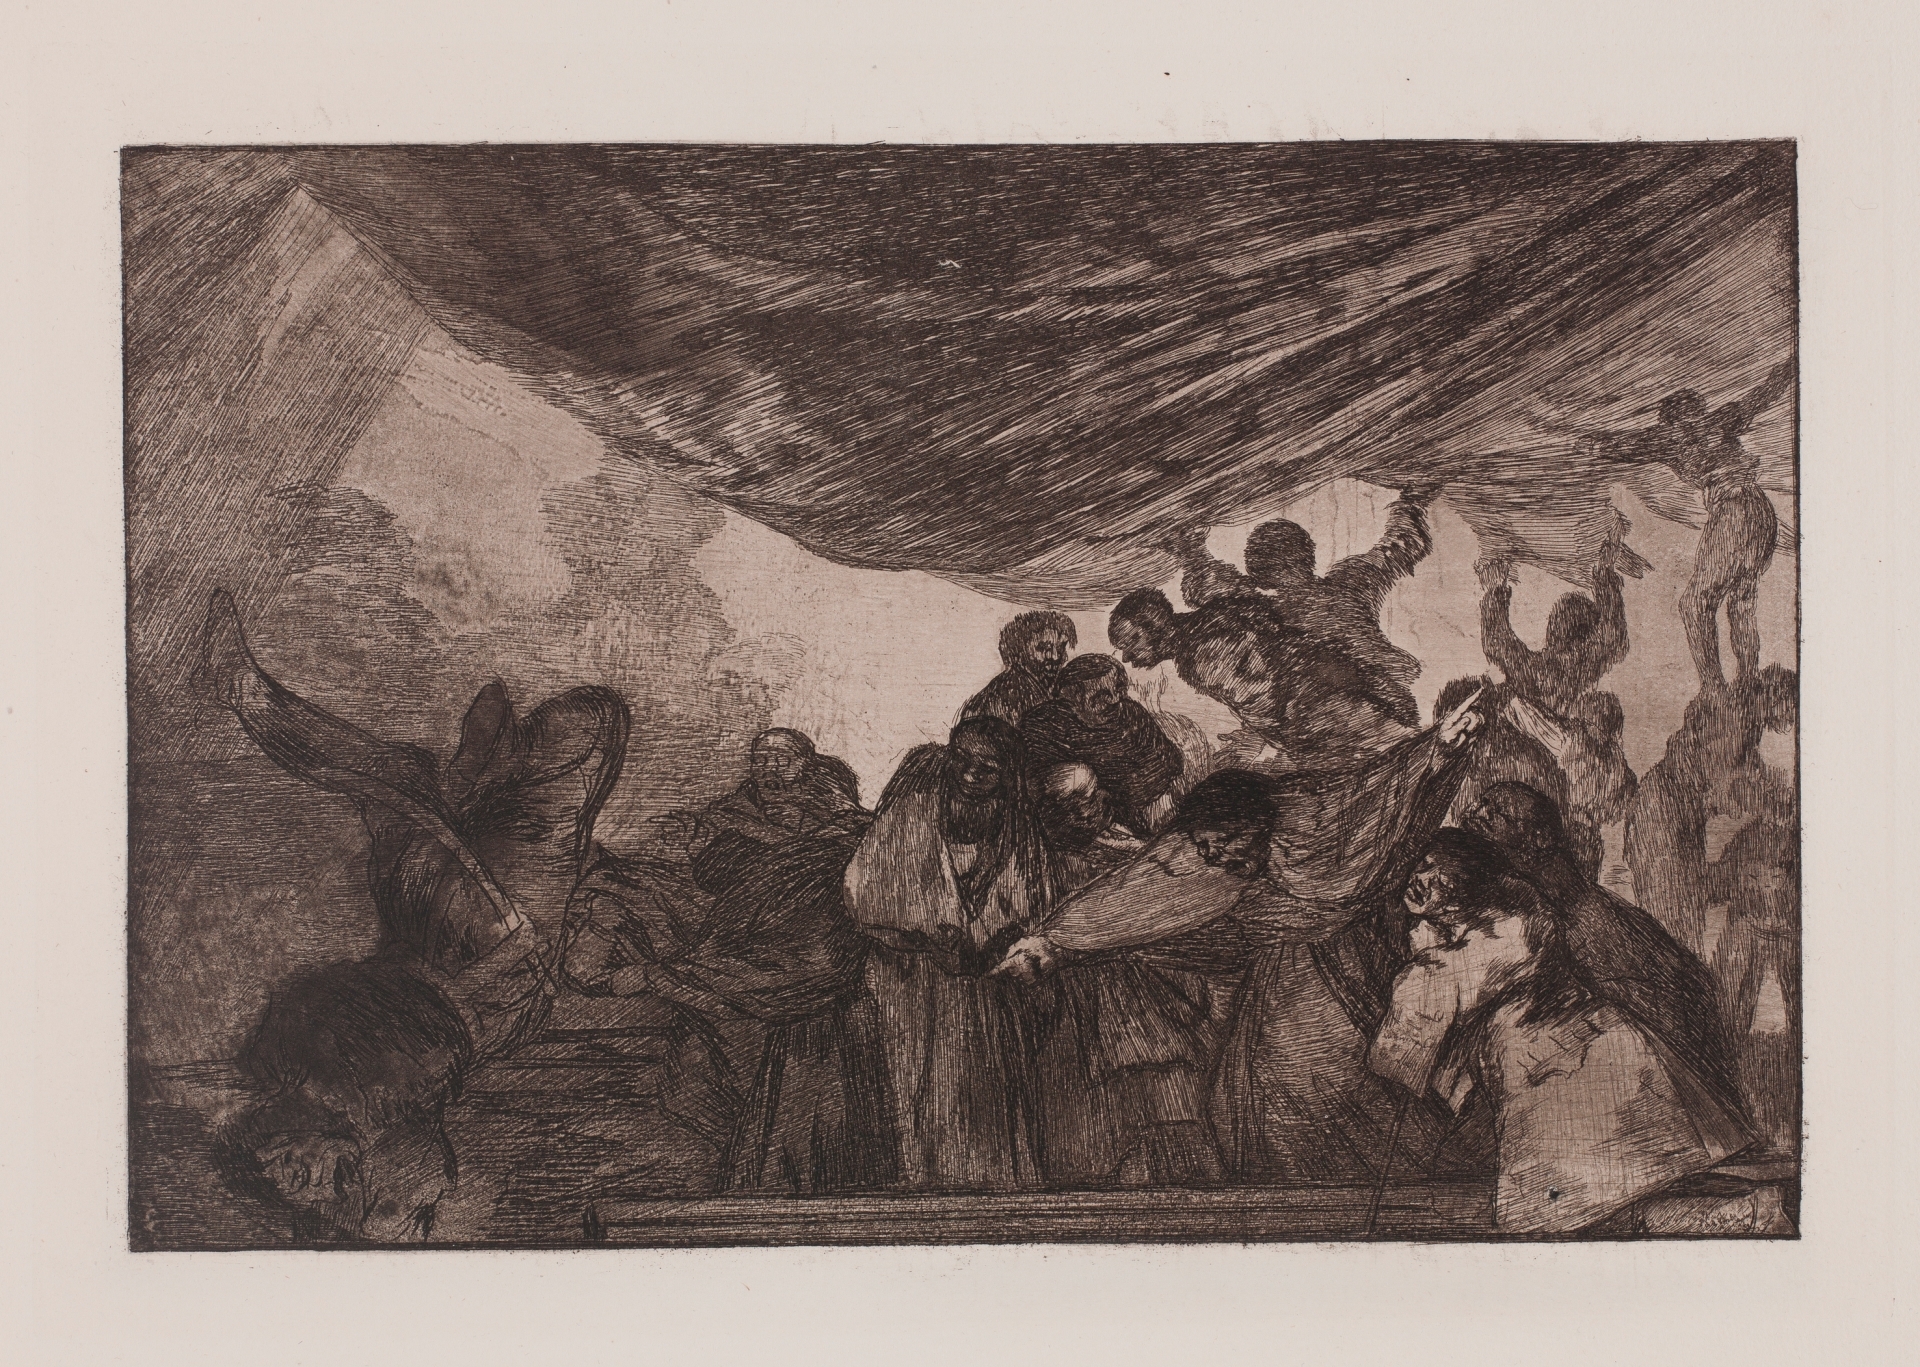 Francisco de Goya;, Disparate Claro, etching and aquatint, circa 1815-1819